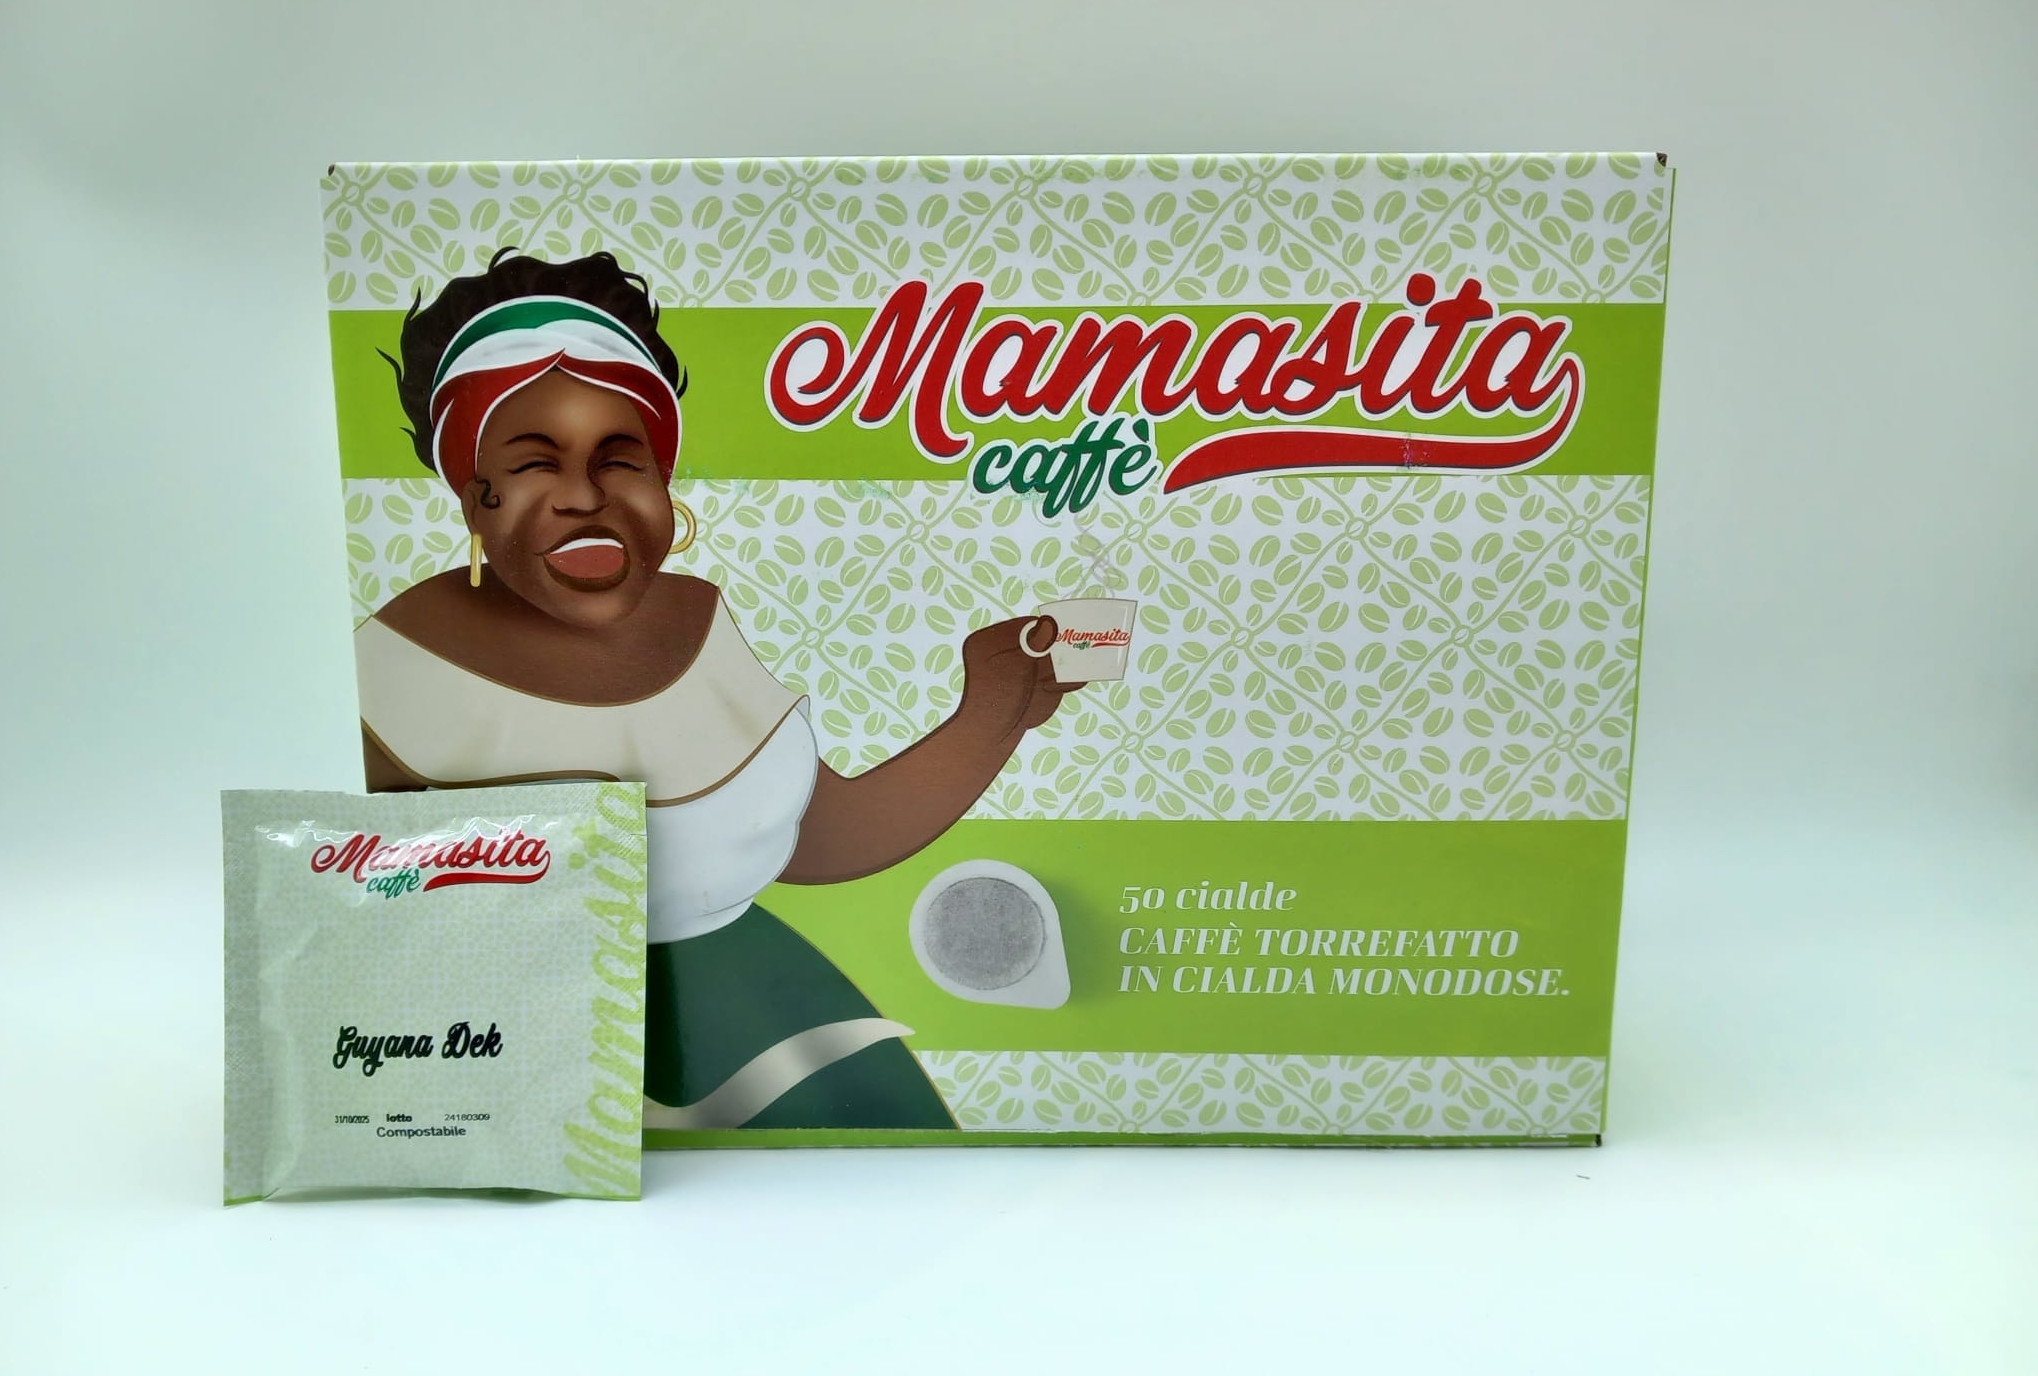 Mamasita Caffè Guyana Dek 50 cialde